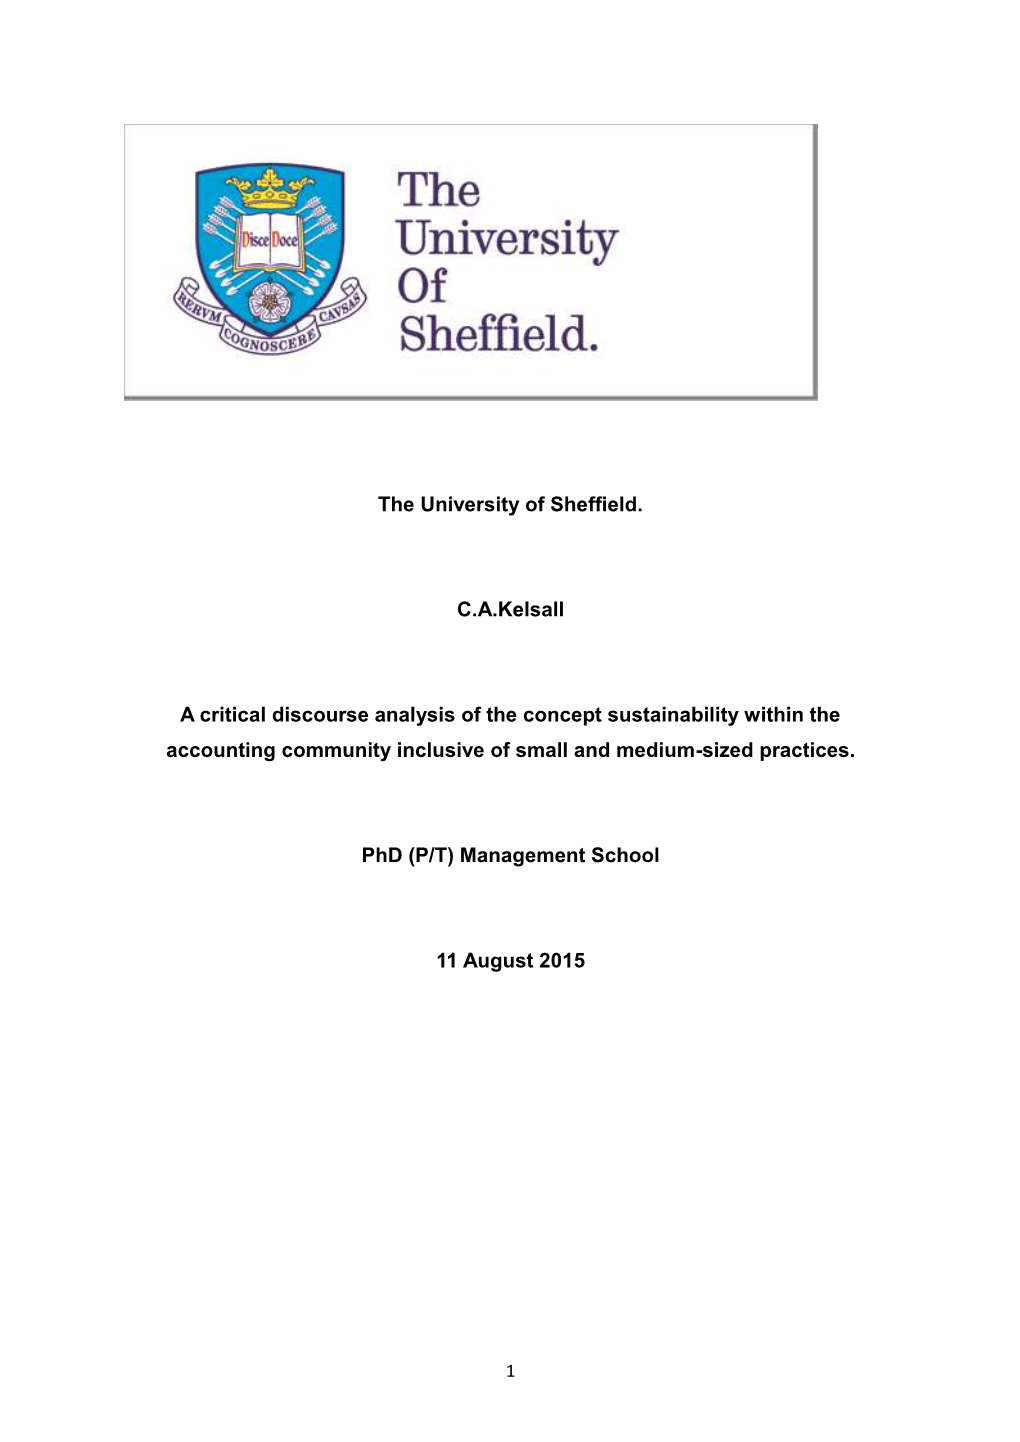 The University of Sheffield. C.A.Kelsall a Critical Discourse